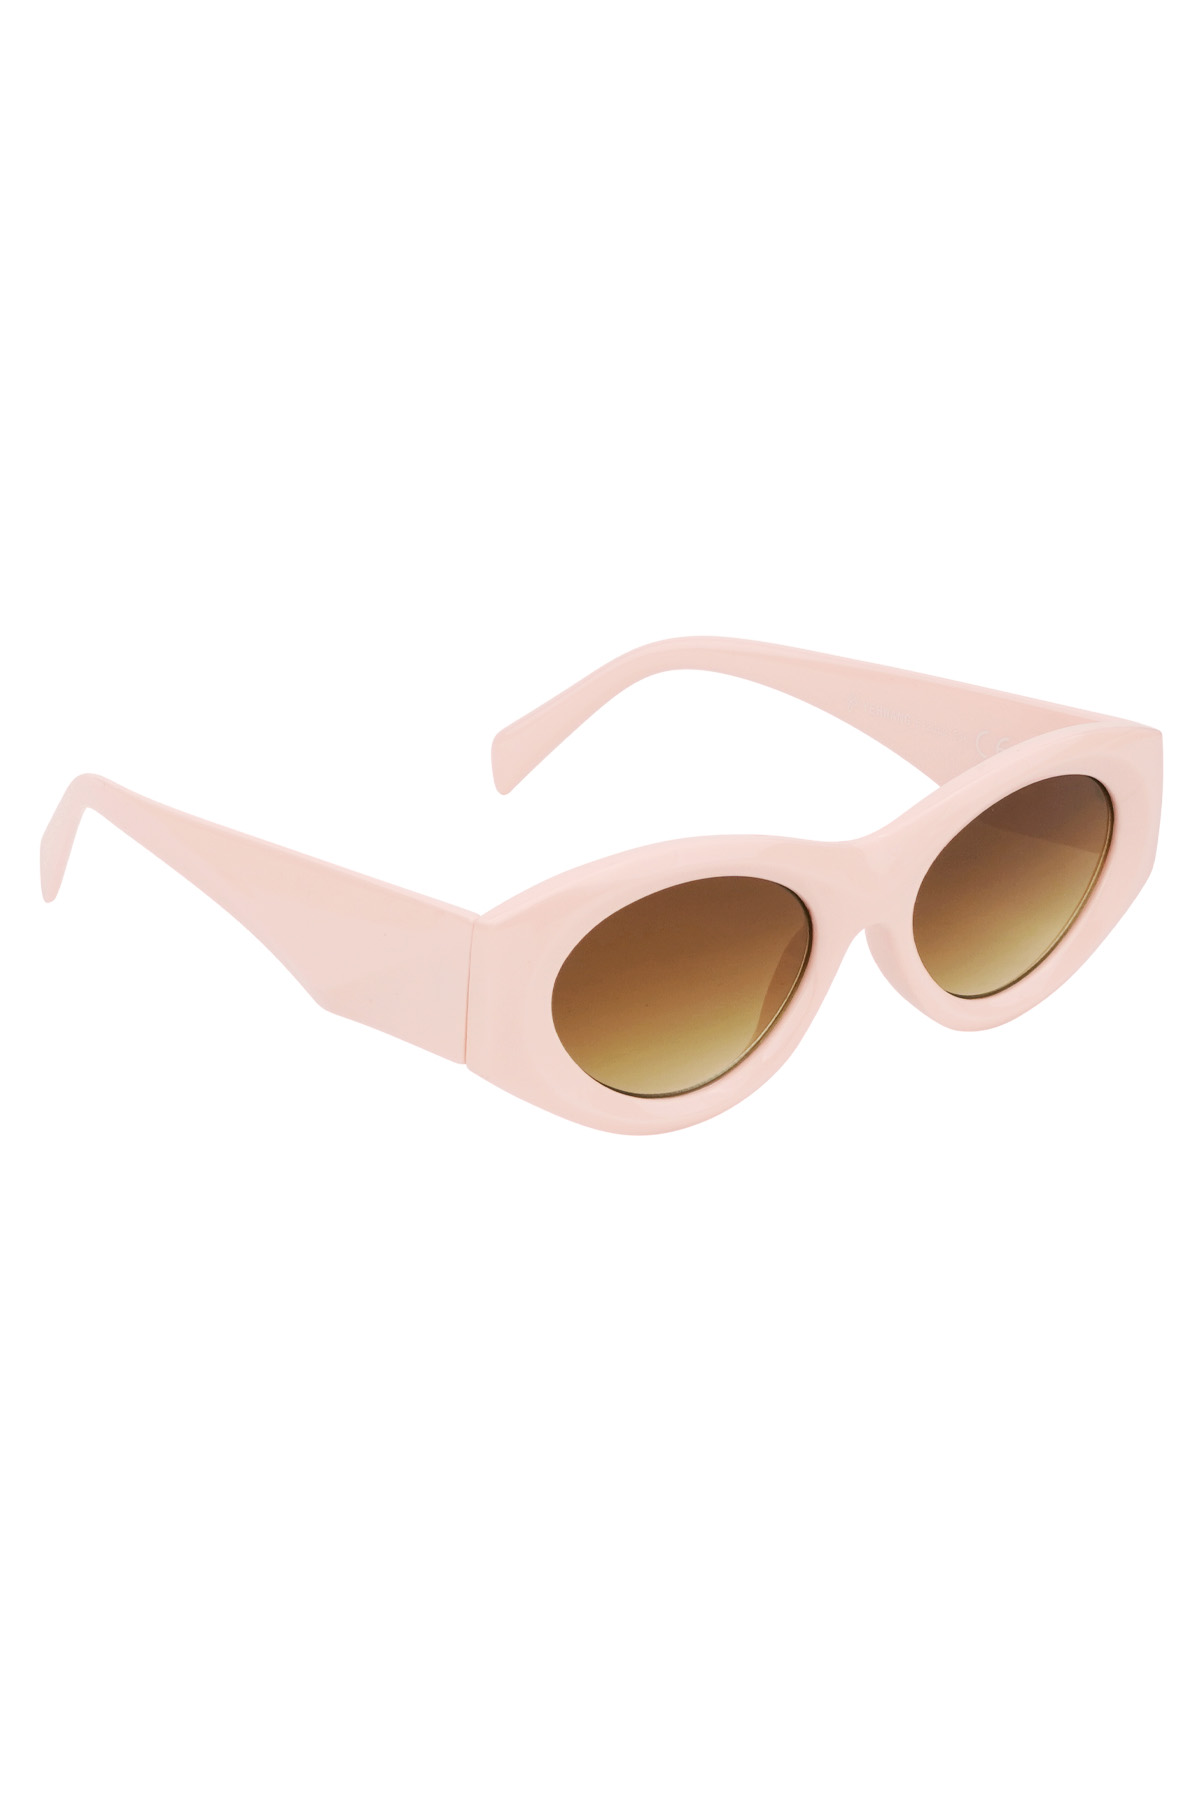 Retro look a like sunglasses - pink